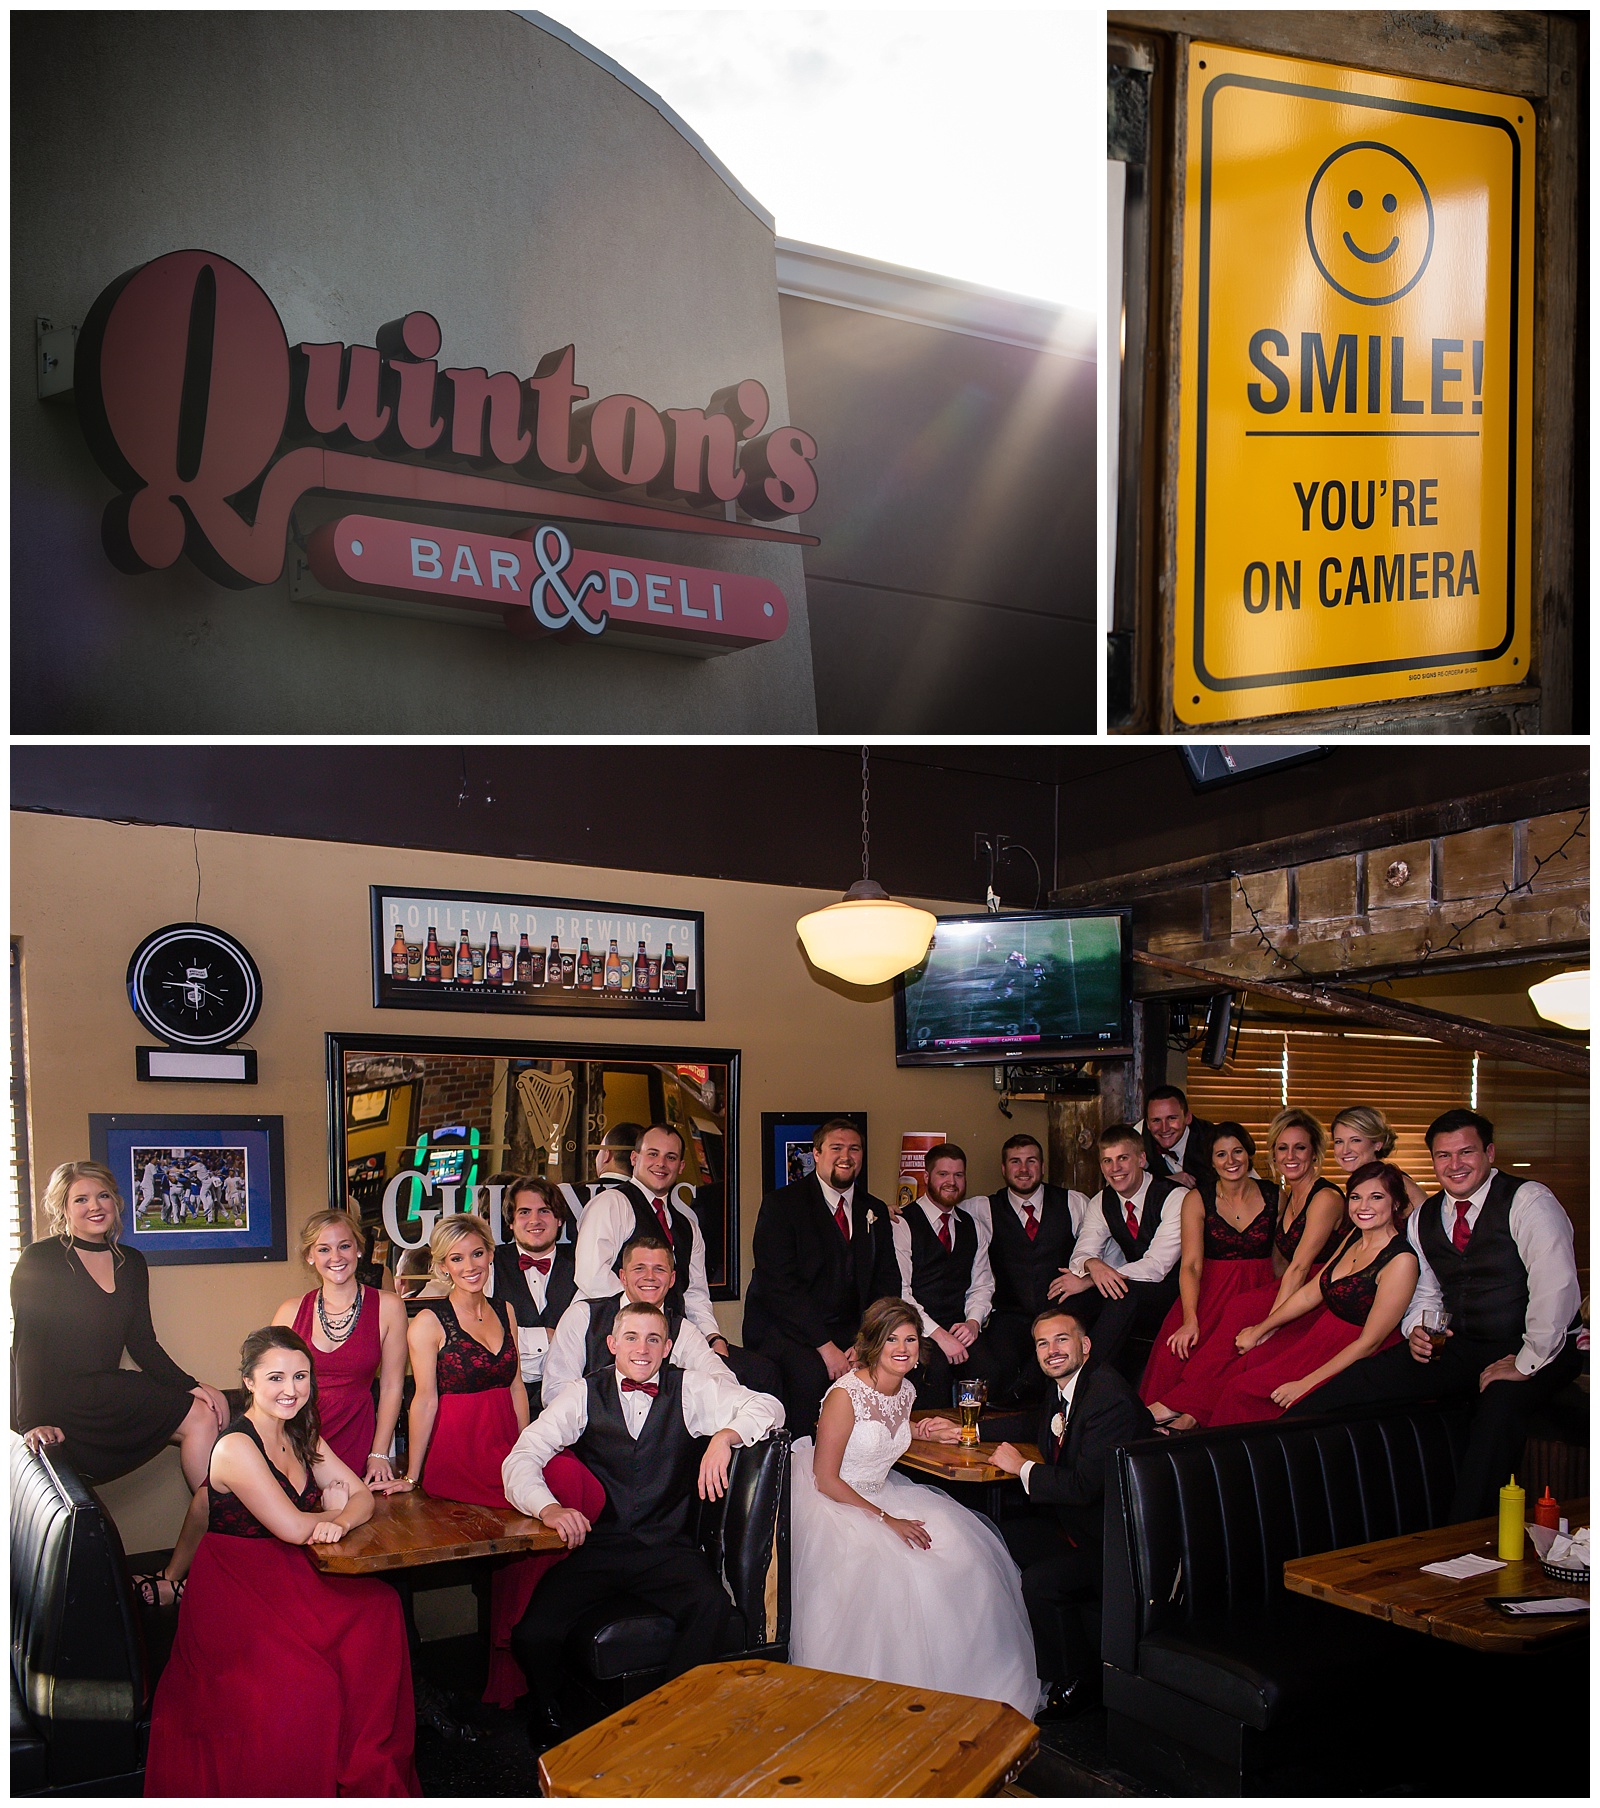 Wedding photography at Quinton's in Topeka, Kansas.